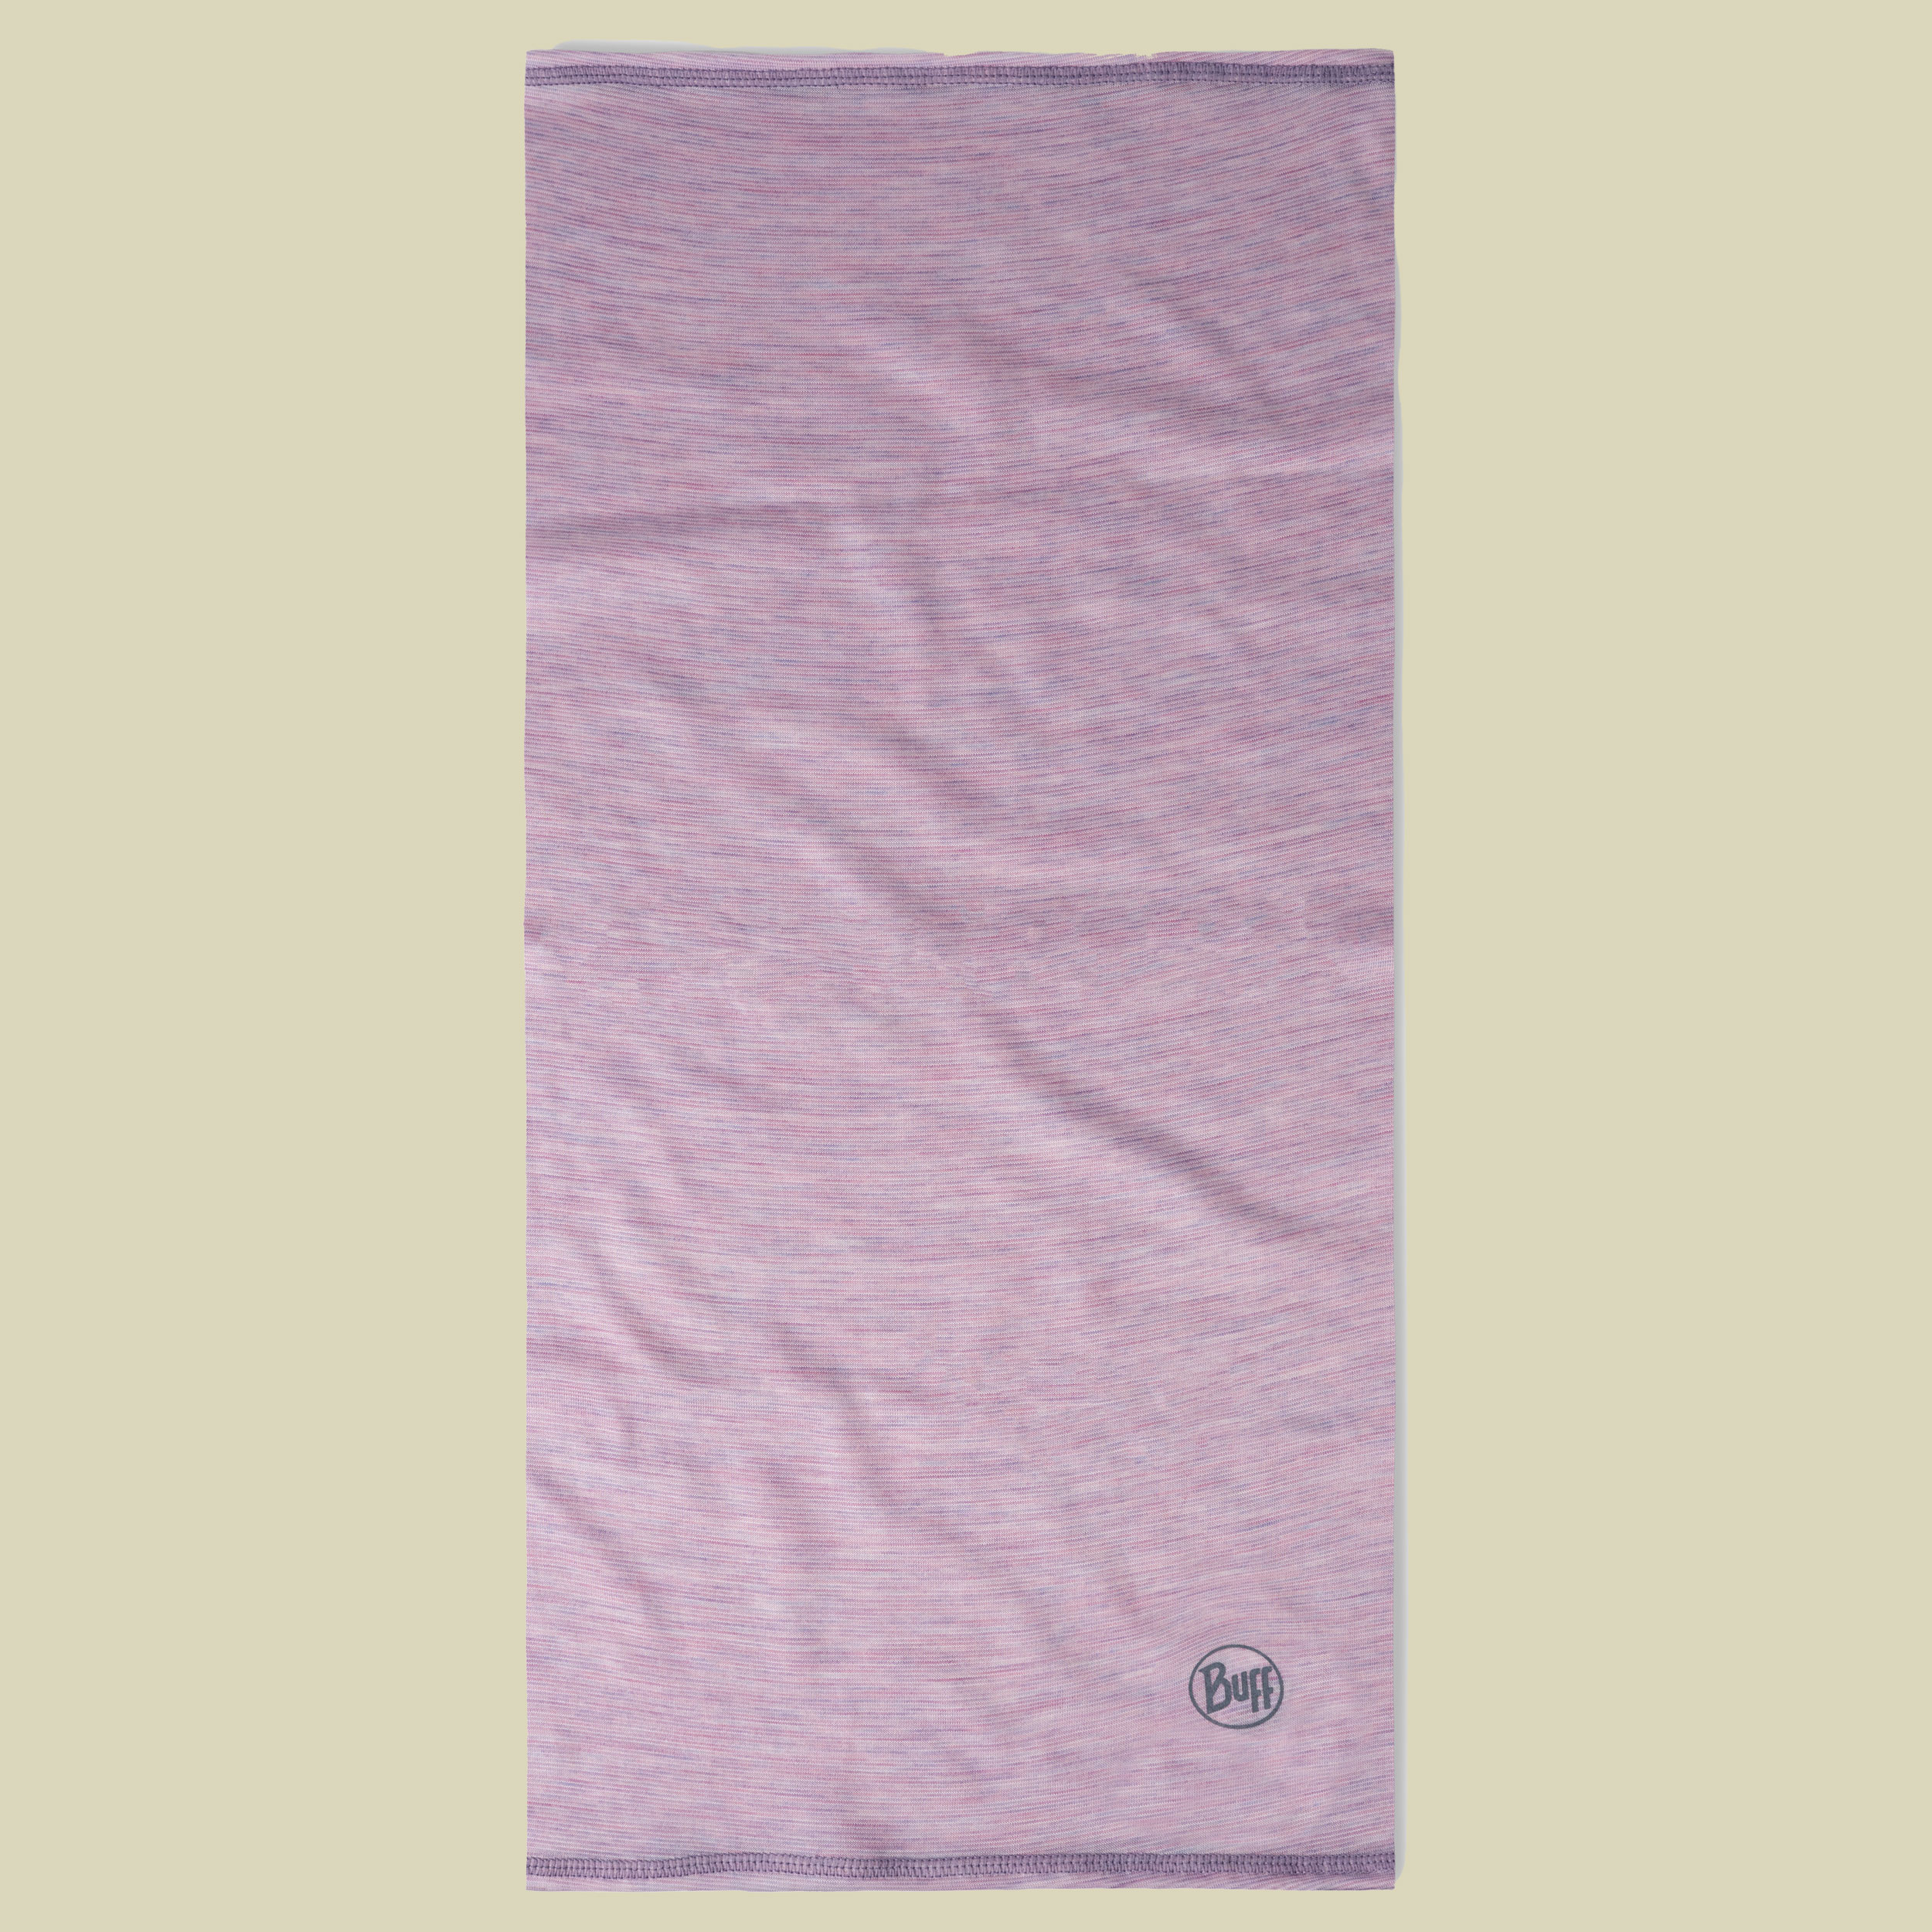 Lightweight Merino Wool Patterned & Stripes Größe regular Farbe multistripes lilac sand